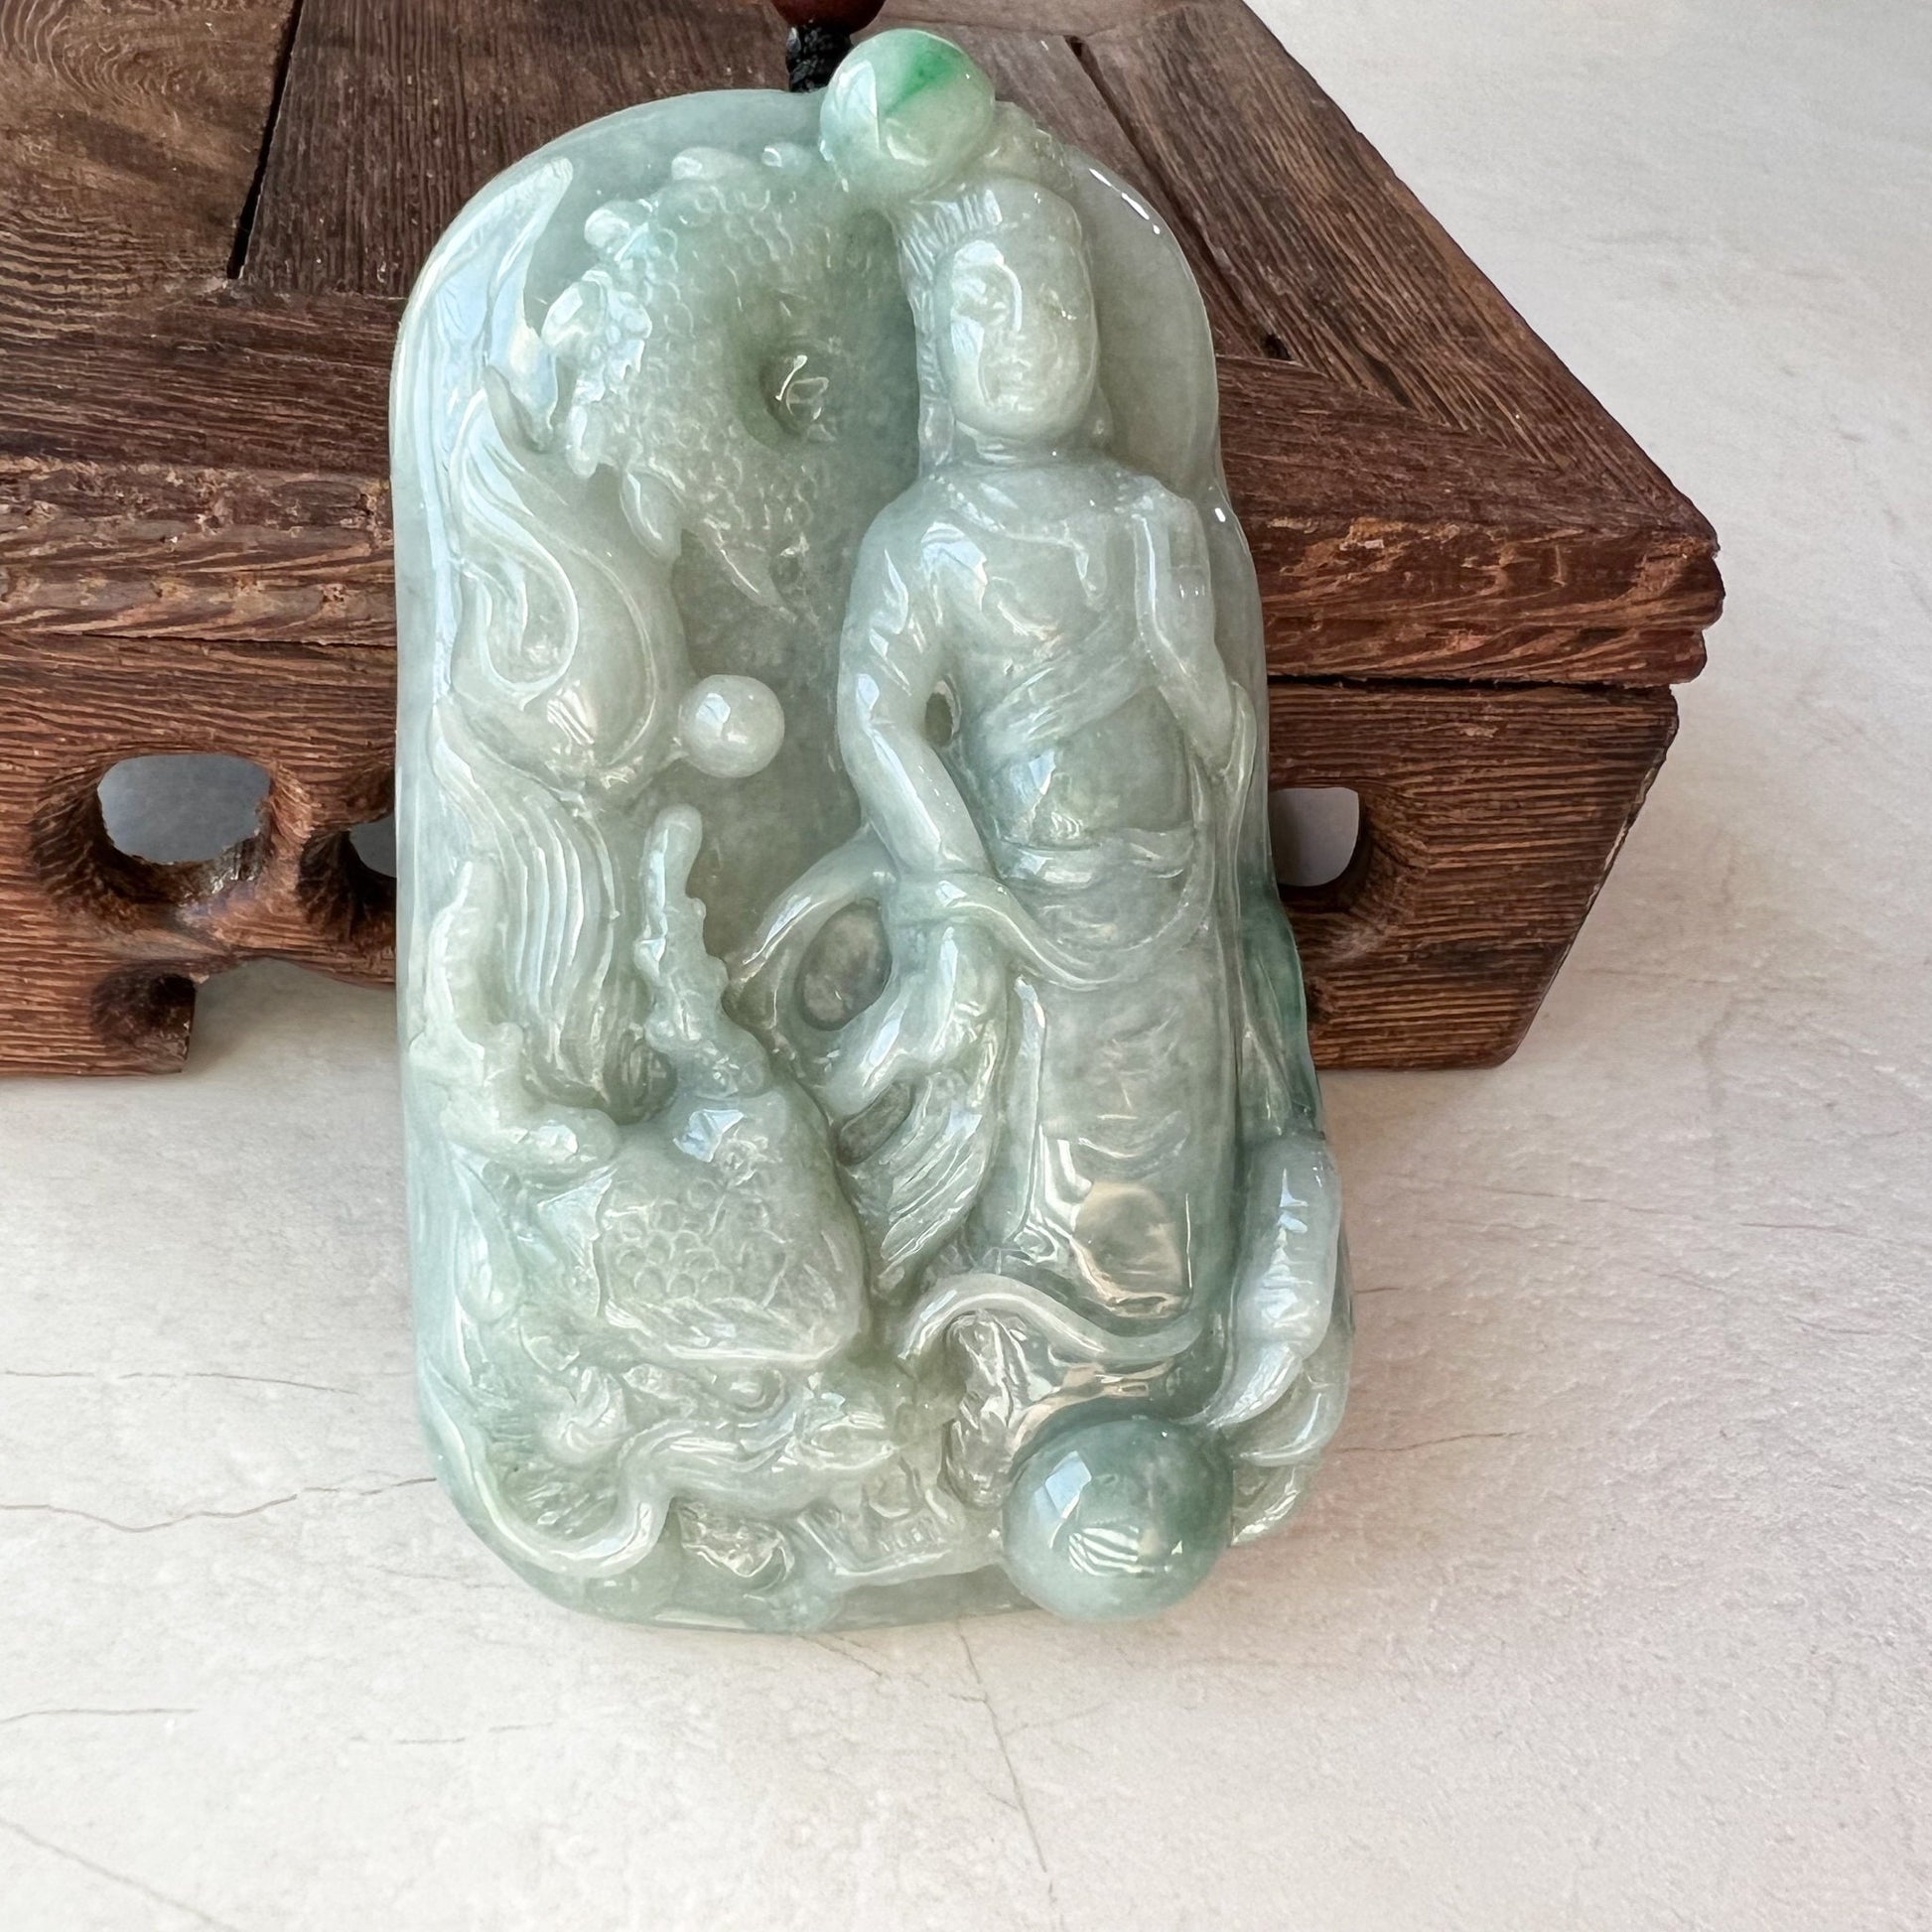 Large Jadeite Jade Guan Yin Kwan Yin Protected by Dragon Avalokitesvara Semi-Translucent Carved Pendant Necklace, YJ-0321-0348736 - AriaDesignCollection